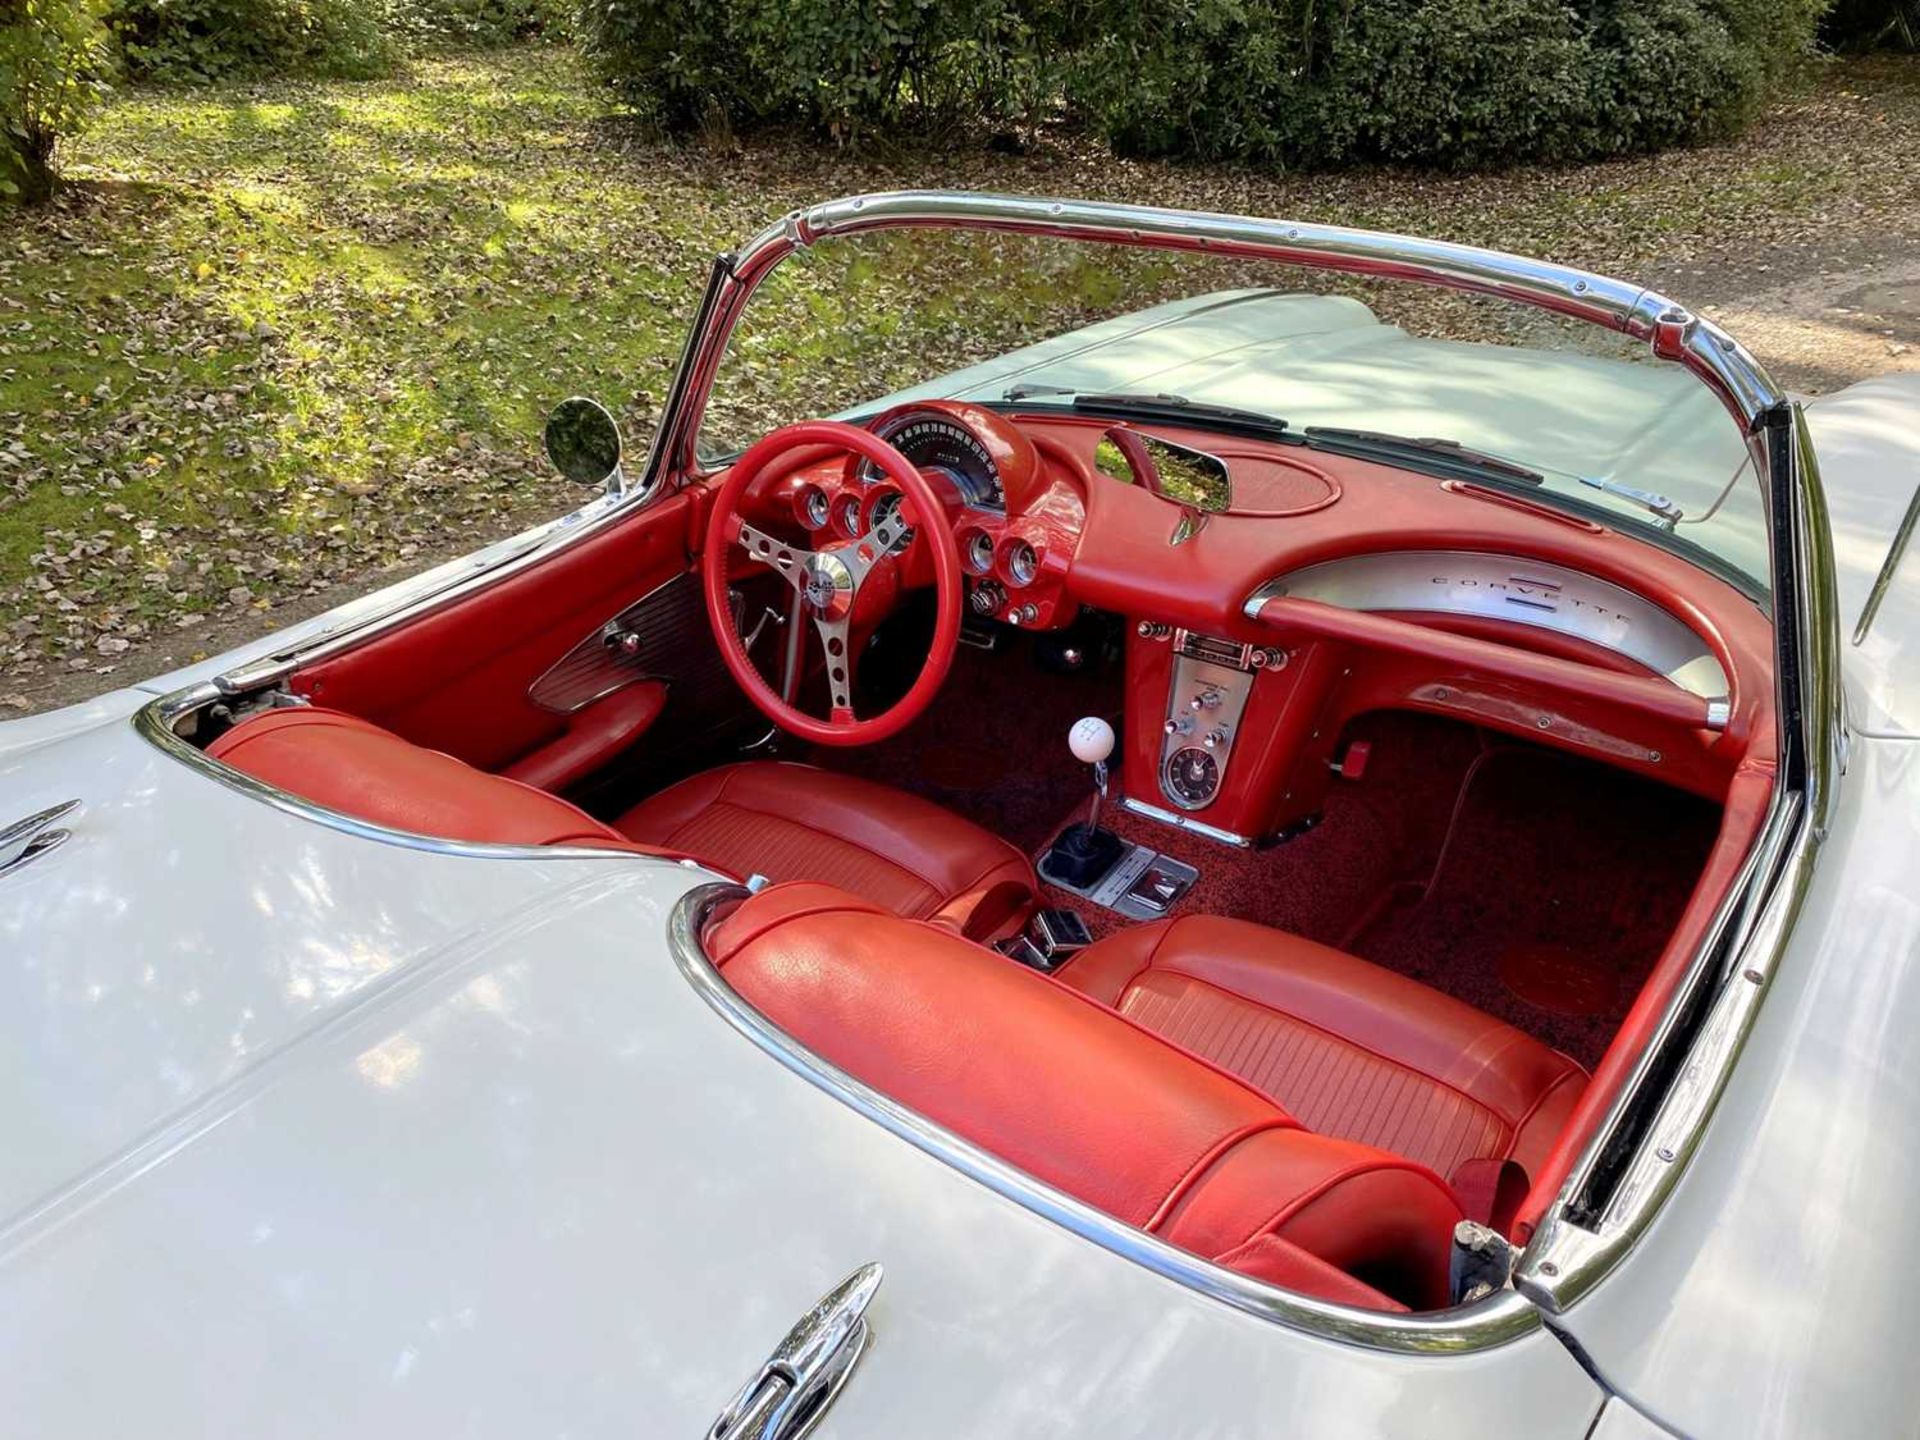 1961 Chevrolet Corvette Engine upgraded to a 5.4L V8 - Image 47 of 95